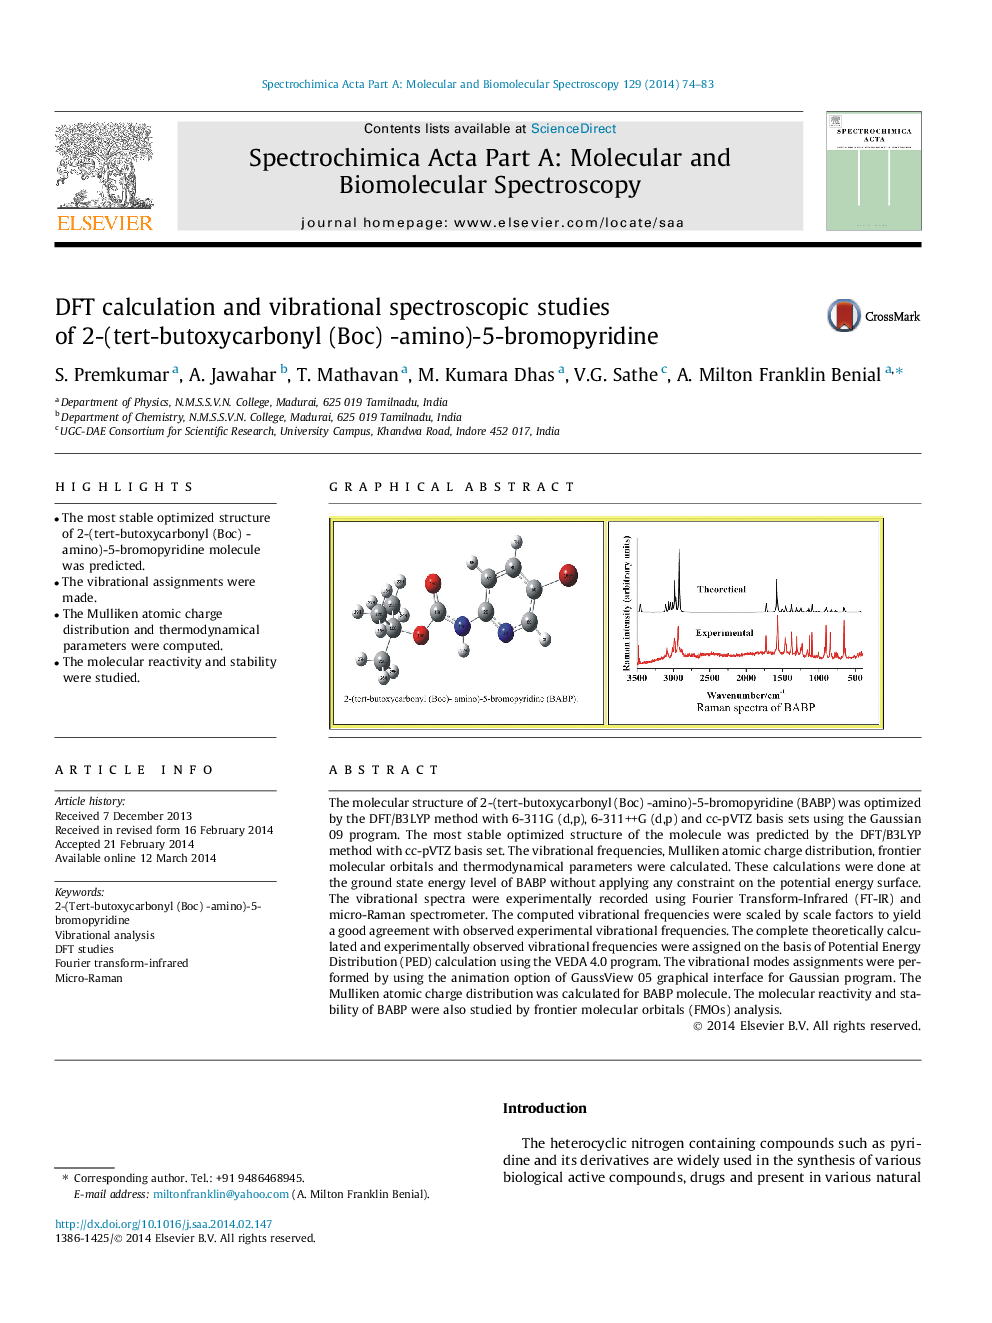 DFT calculation and vibrational spectroscopic studies of 2-(tert-butoxycarbonyl (Boc) -amino)-5-bromopyridine